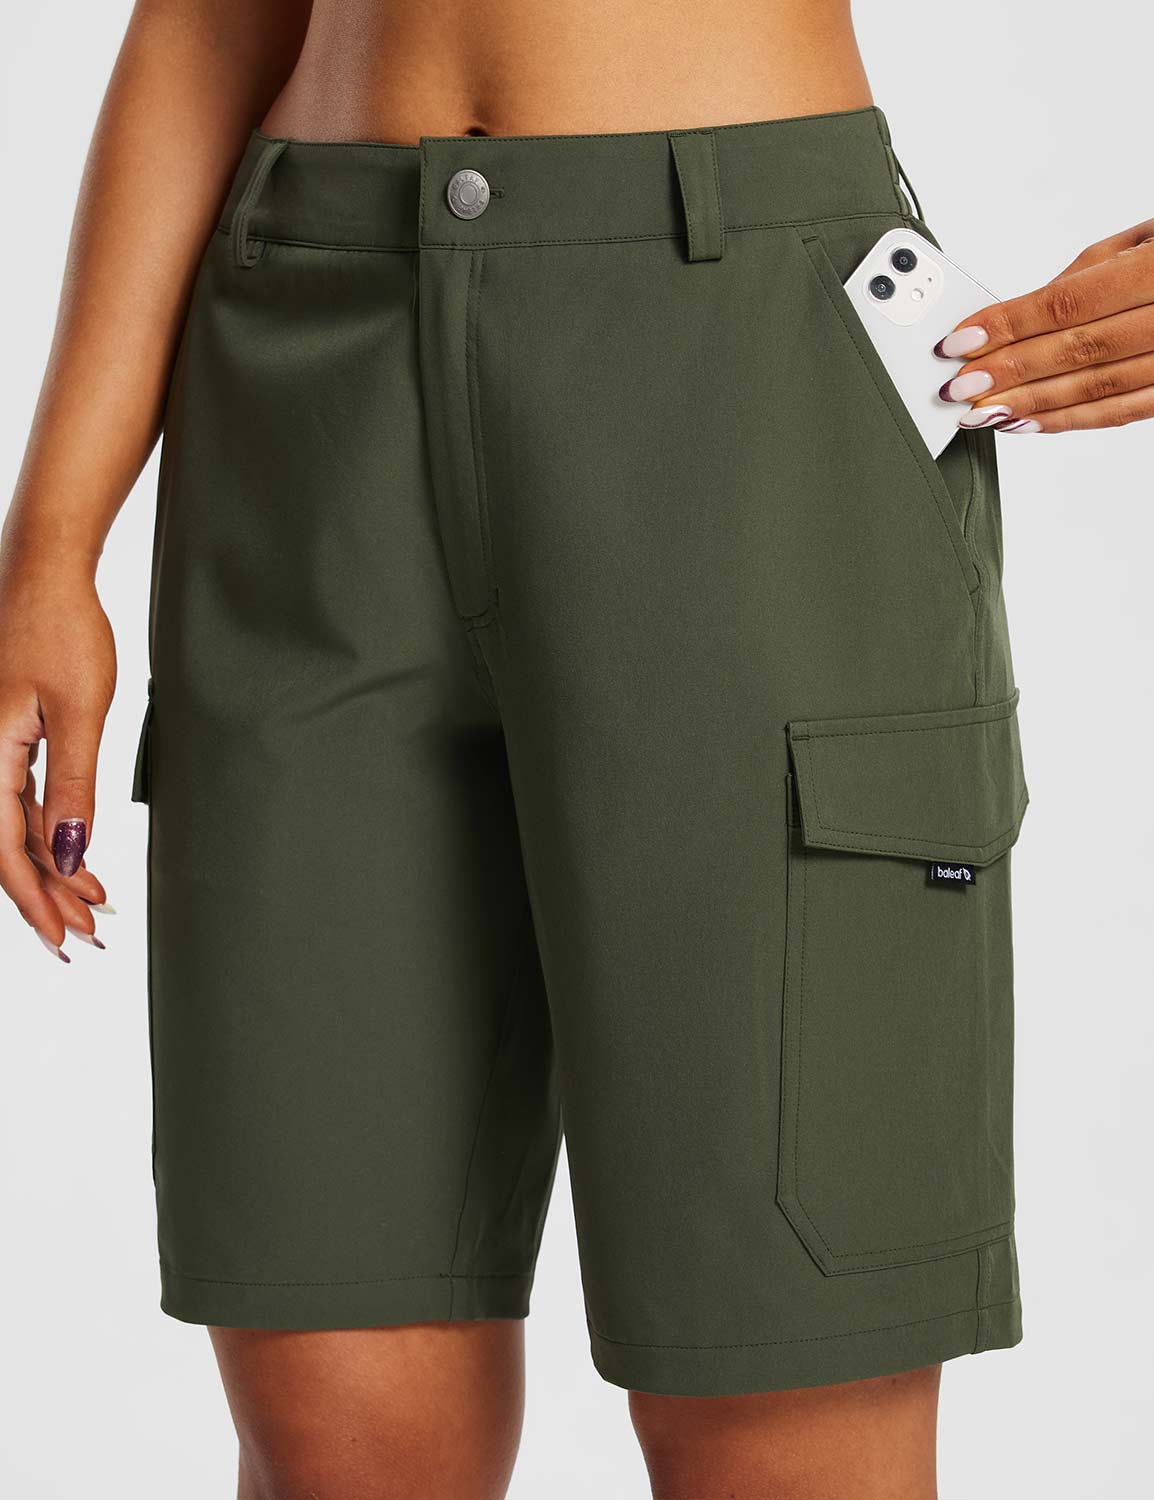 Baleaf Women's Laureate Quick-Dry Cargo Shorts ega025 Rifle Green Details